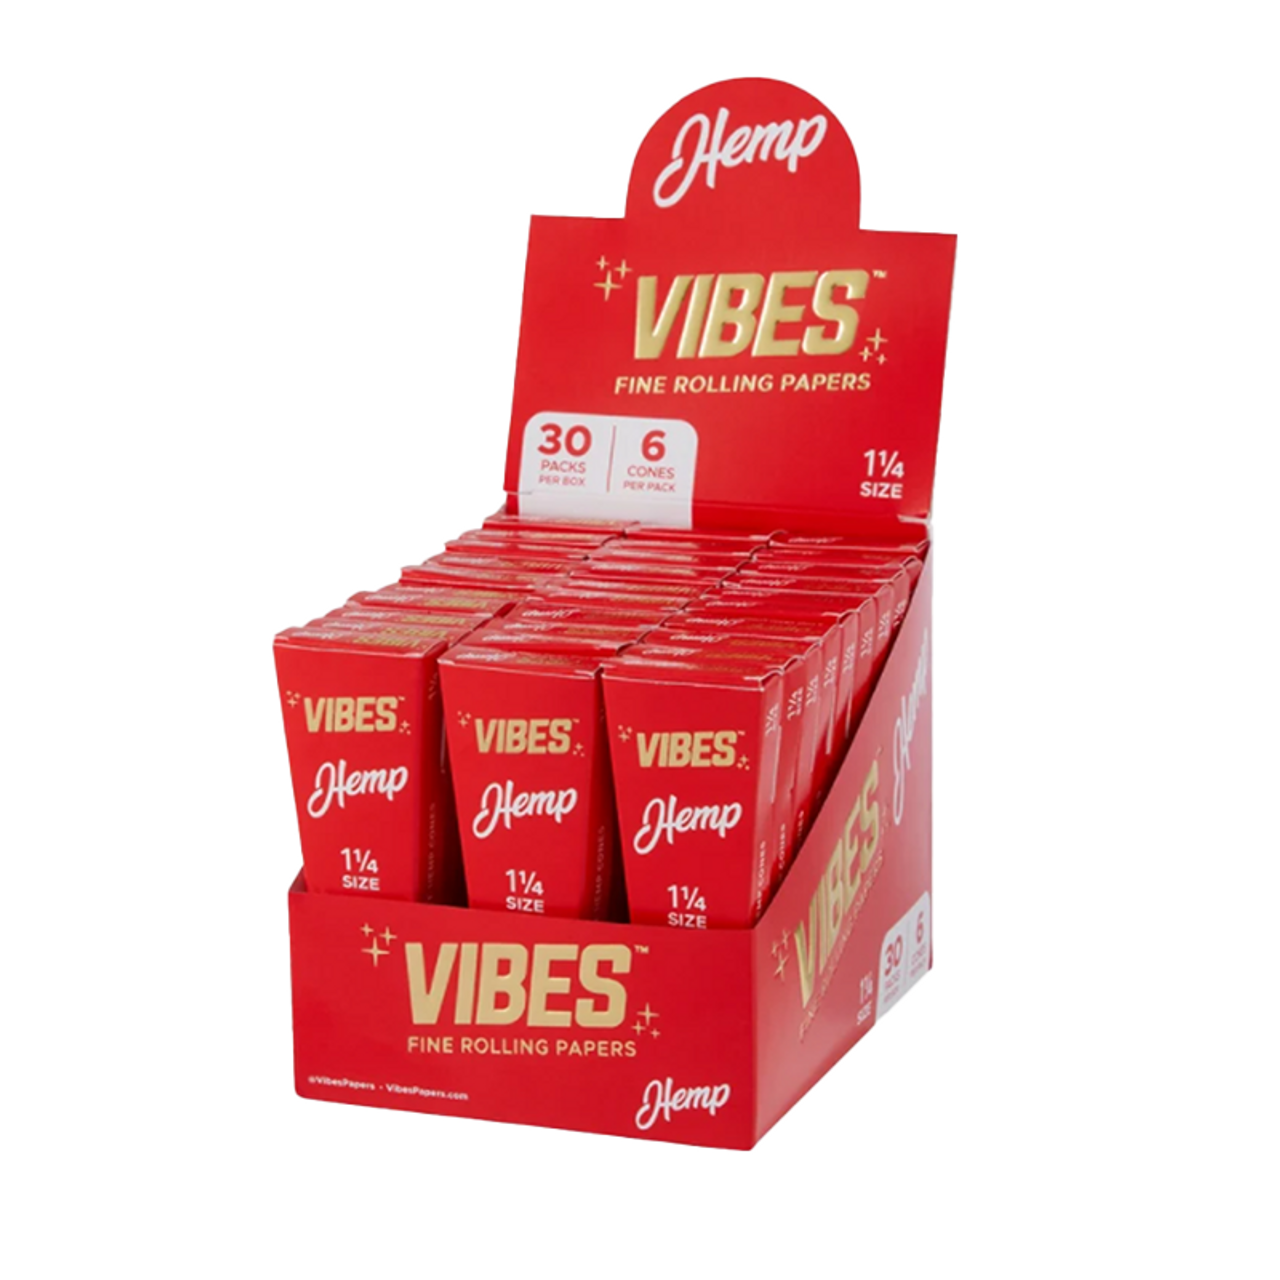 Vibes - Cones - Coffin - 1 1/4 - Hemp (Red) - 30 Boxes Per Display 6 Cones Per Box